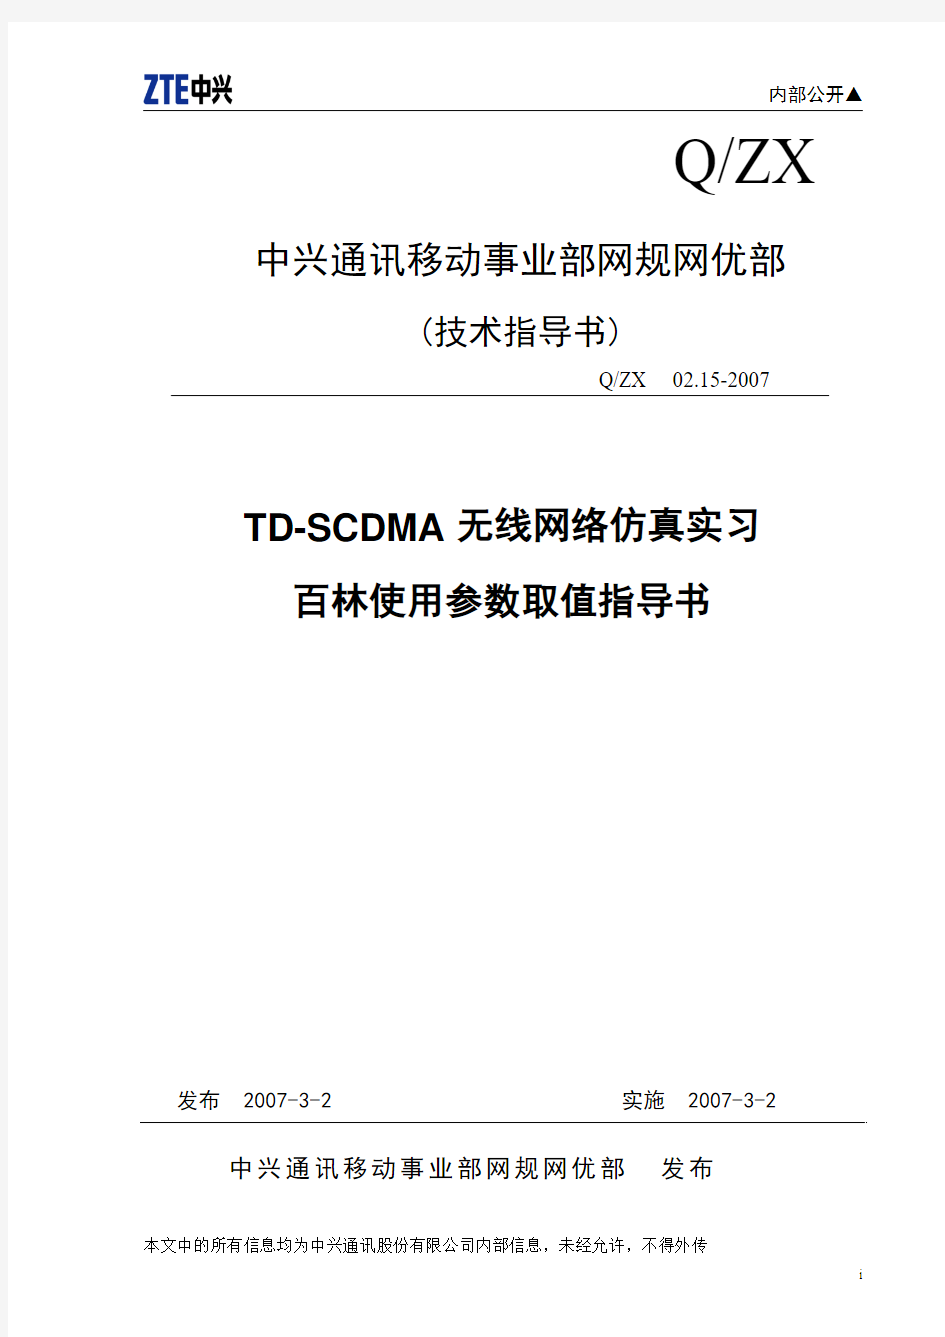 TD-SCDMA网络仿真参数取值指导书-百林(v1.2)_20080202